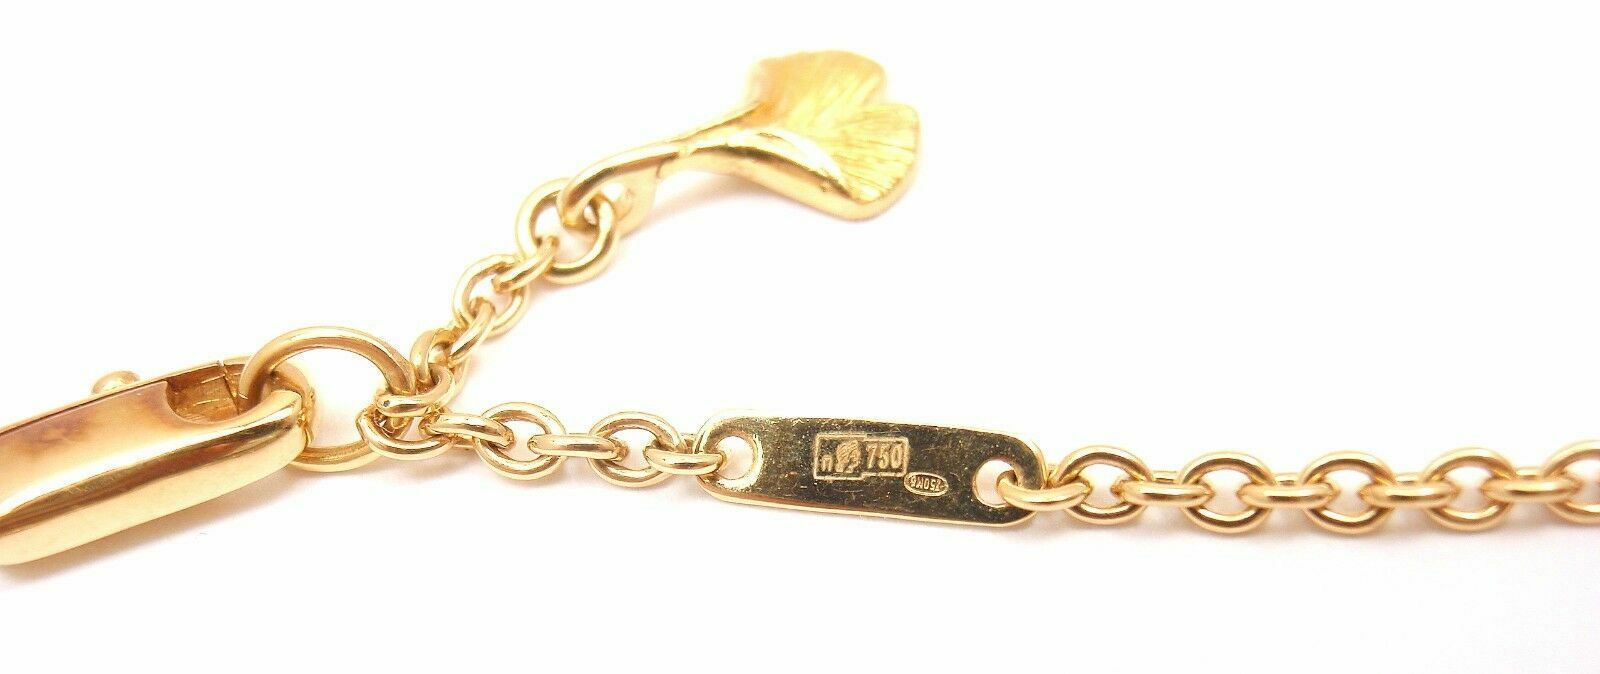 Carrera y Carrera Jewelry & Watches:Fine Jewelry:Necklaces & Pendants New! Authentic Carrera Y Carrera 18k Yellow Gold Ginkgo Onyx Pendant Necklace